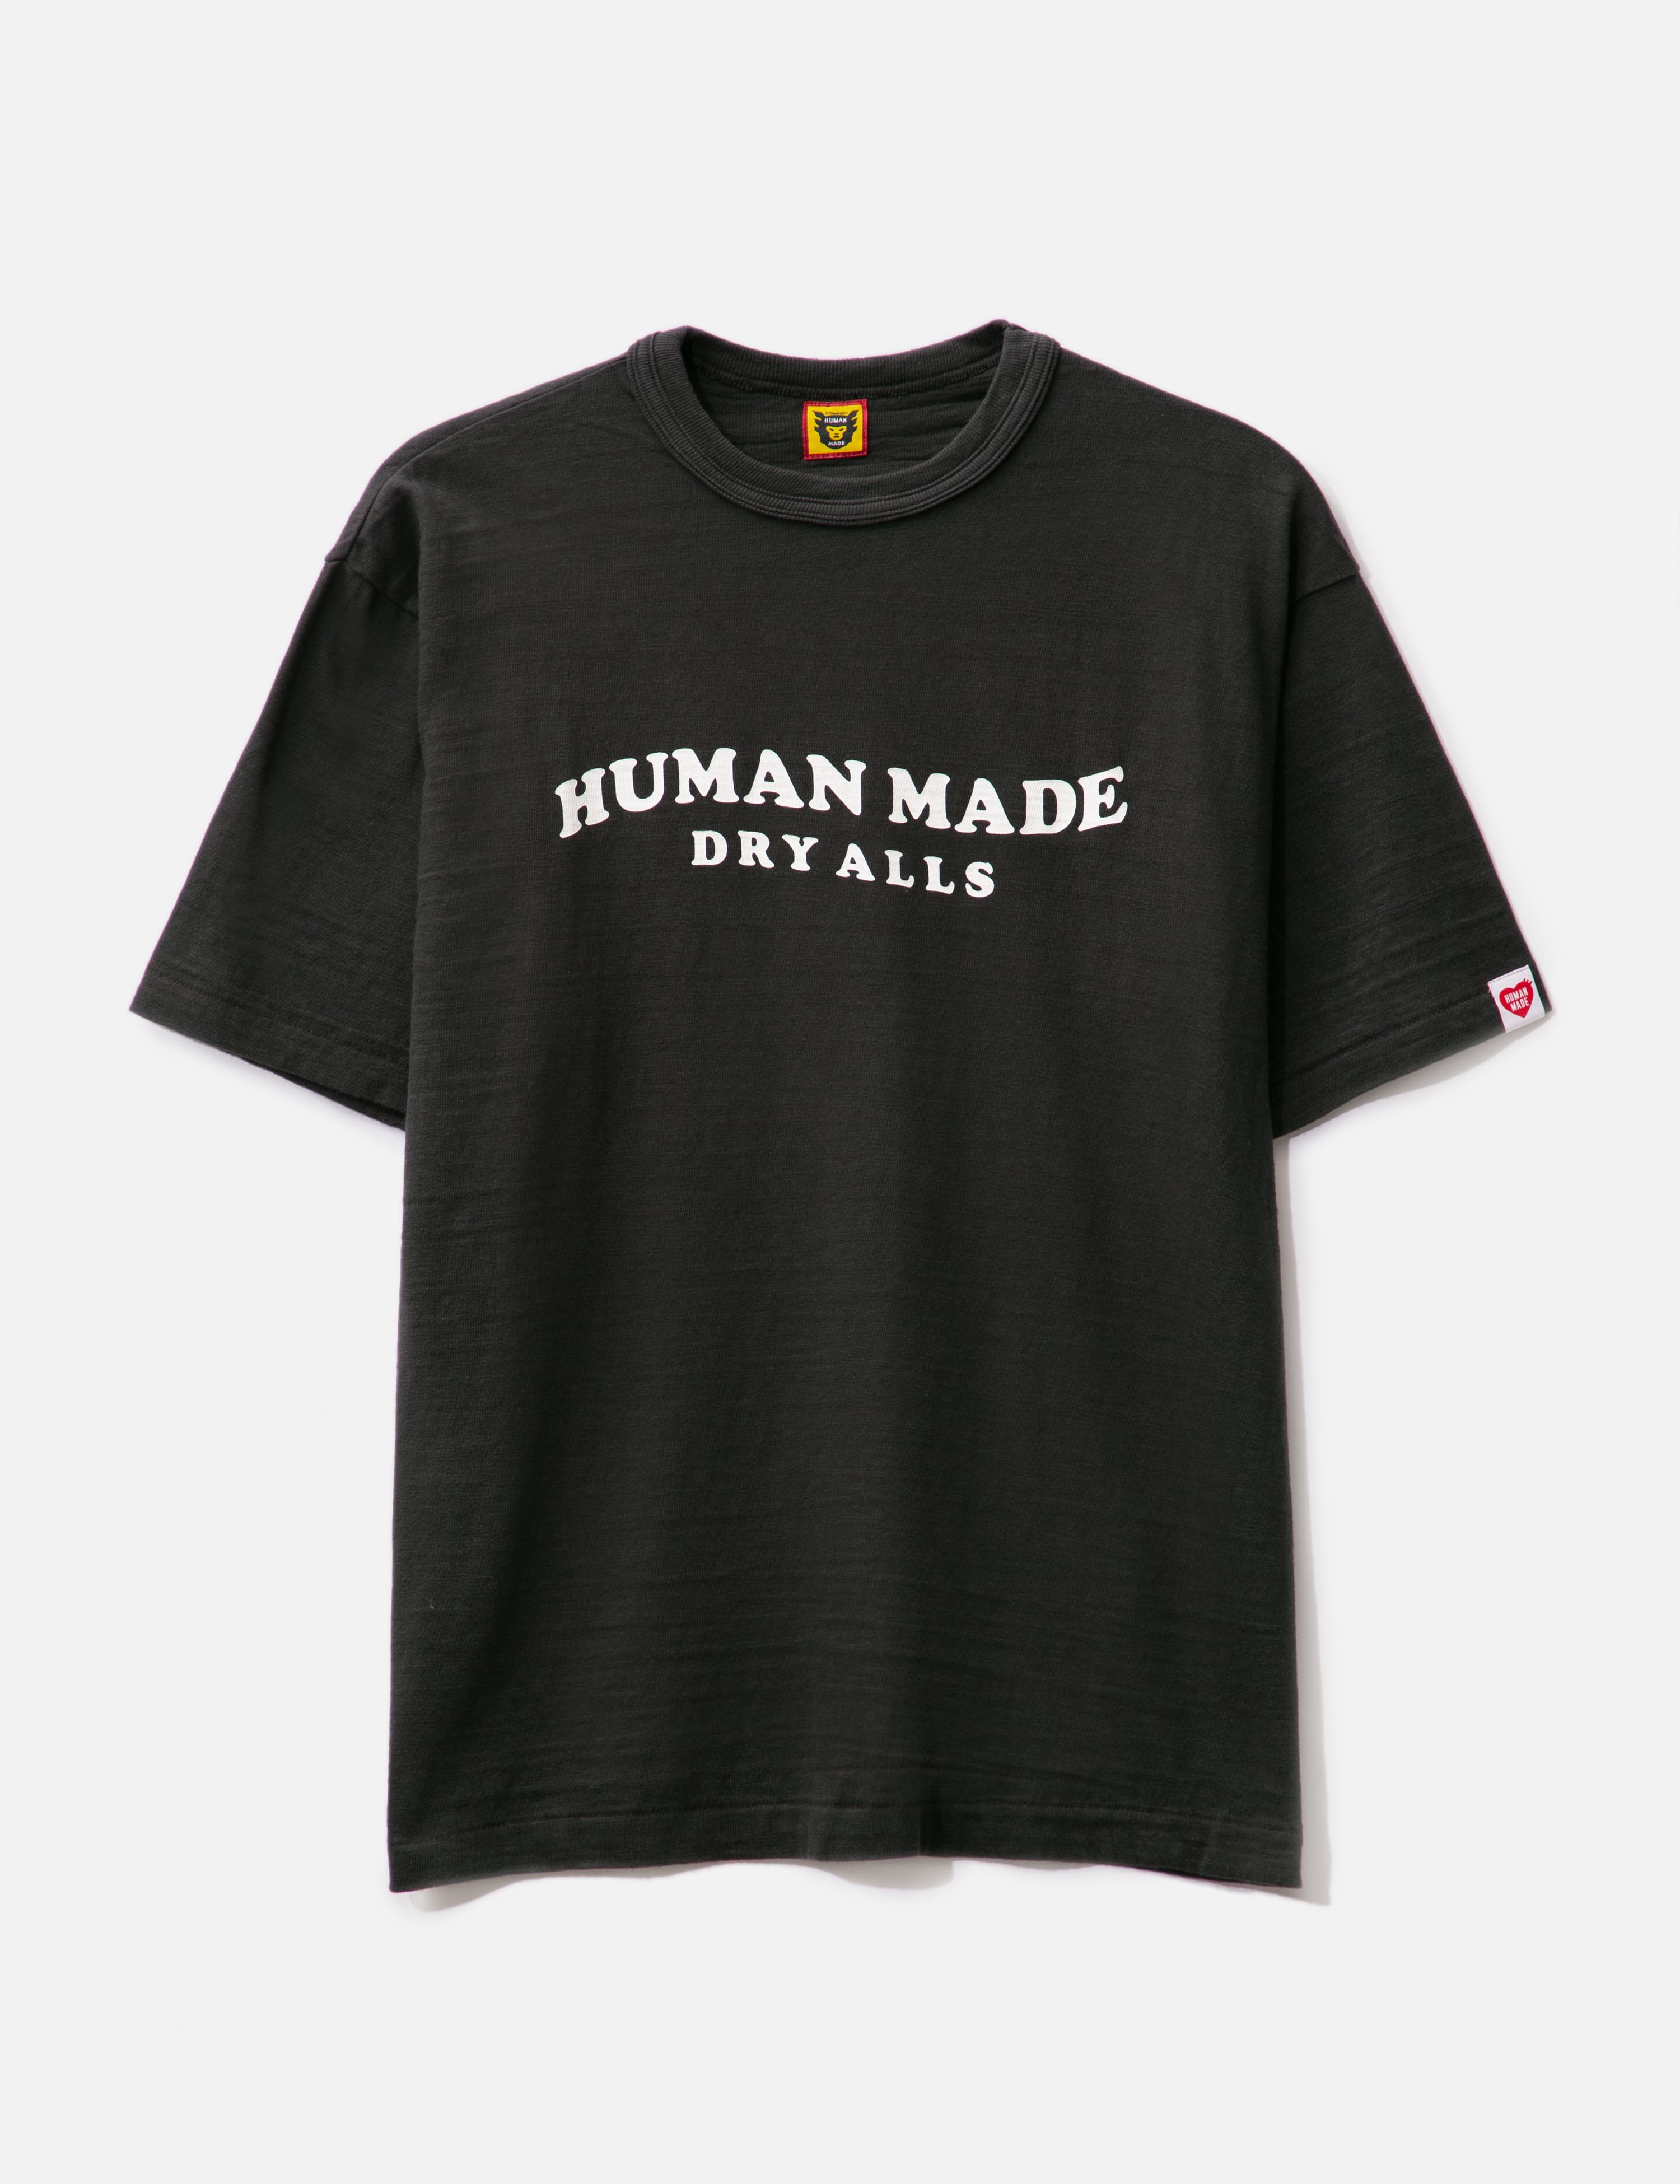 Human Made | HBX - ハイプビースト(Hypebeast)が厳選したグローバル